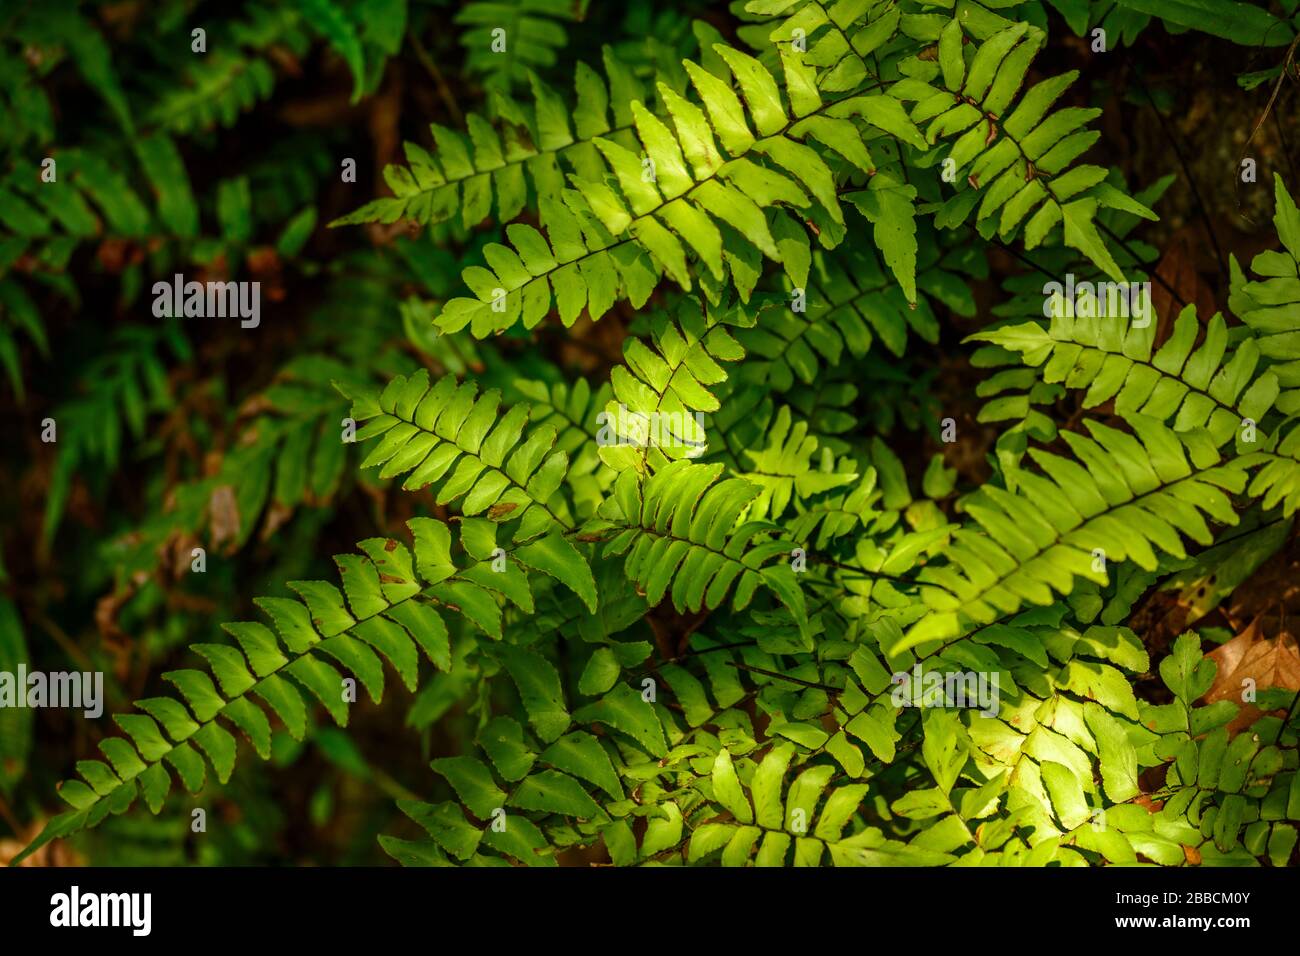 Macho fern or giant sword fern (Nephrolepsis biserrata) Western ghats India Stock Photo